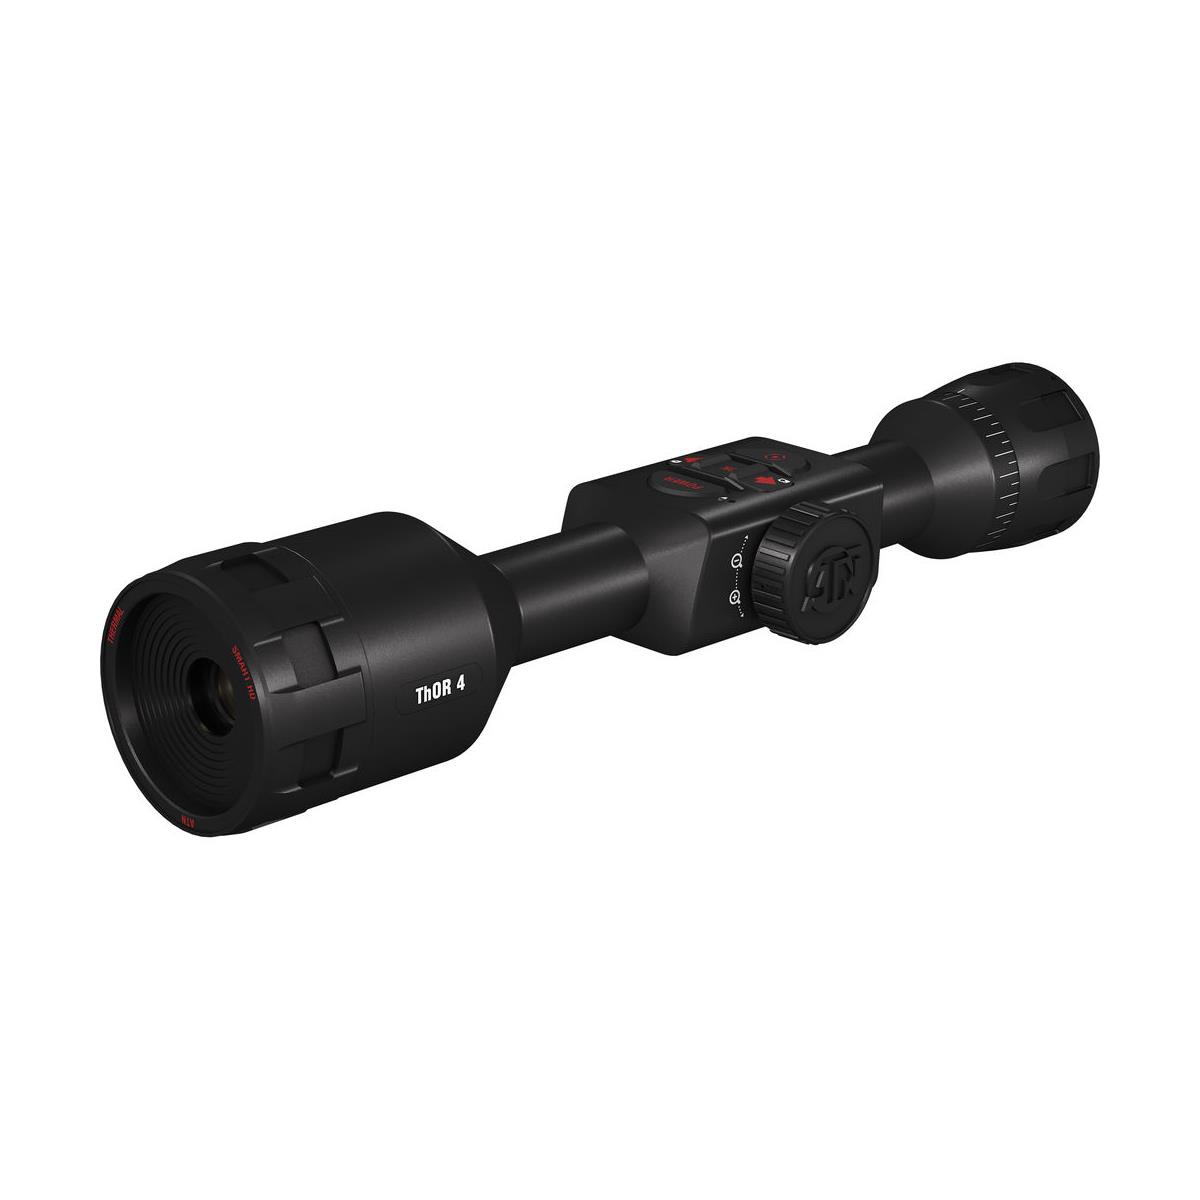 Image of ATN ThOR 4 640 1-10x Smart HD Thermal Digital Riflescope